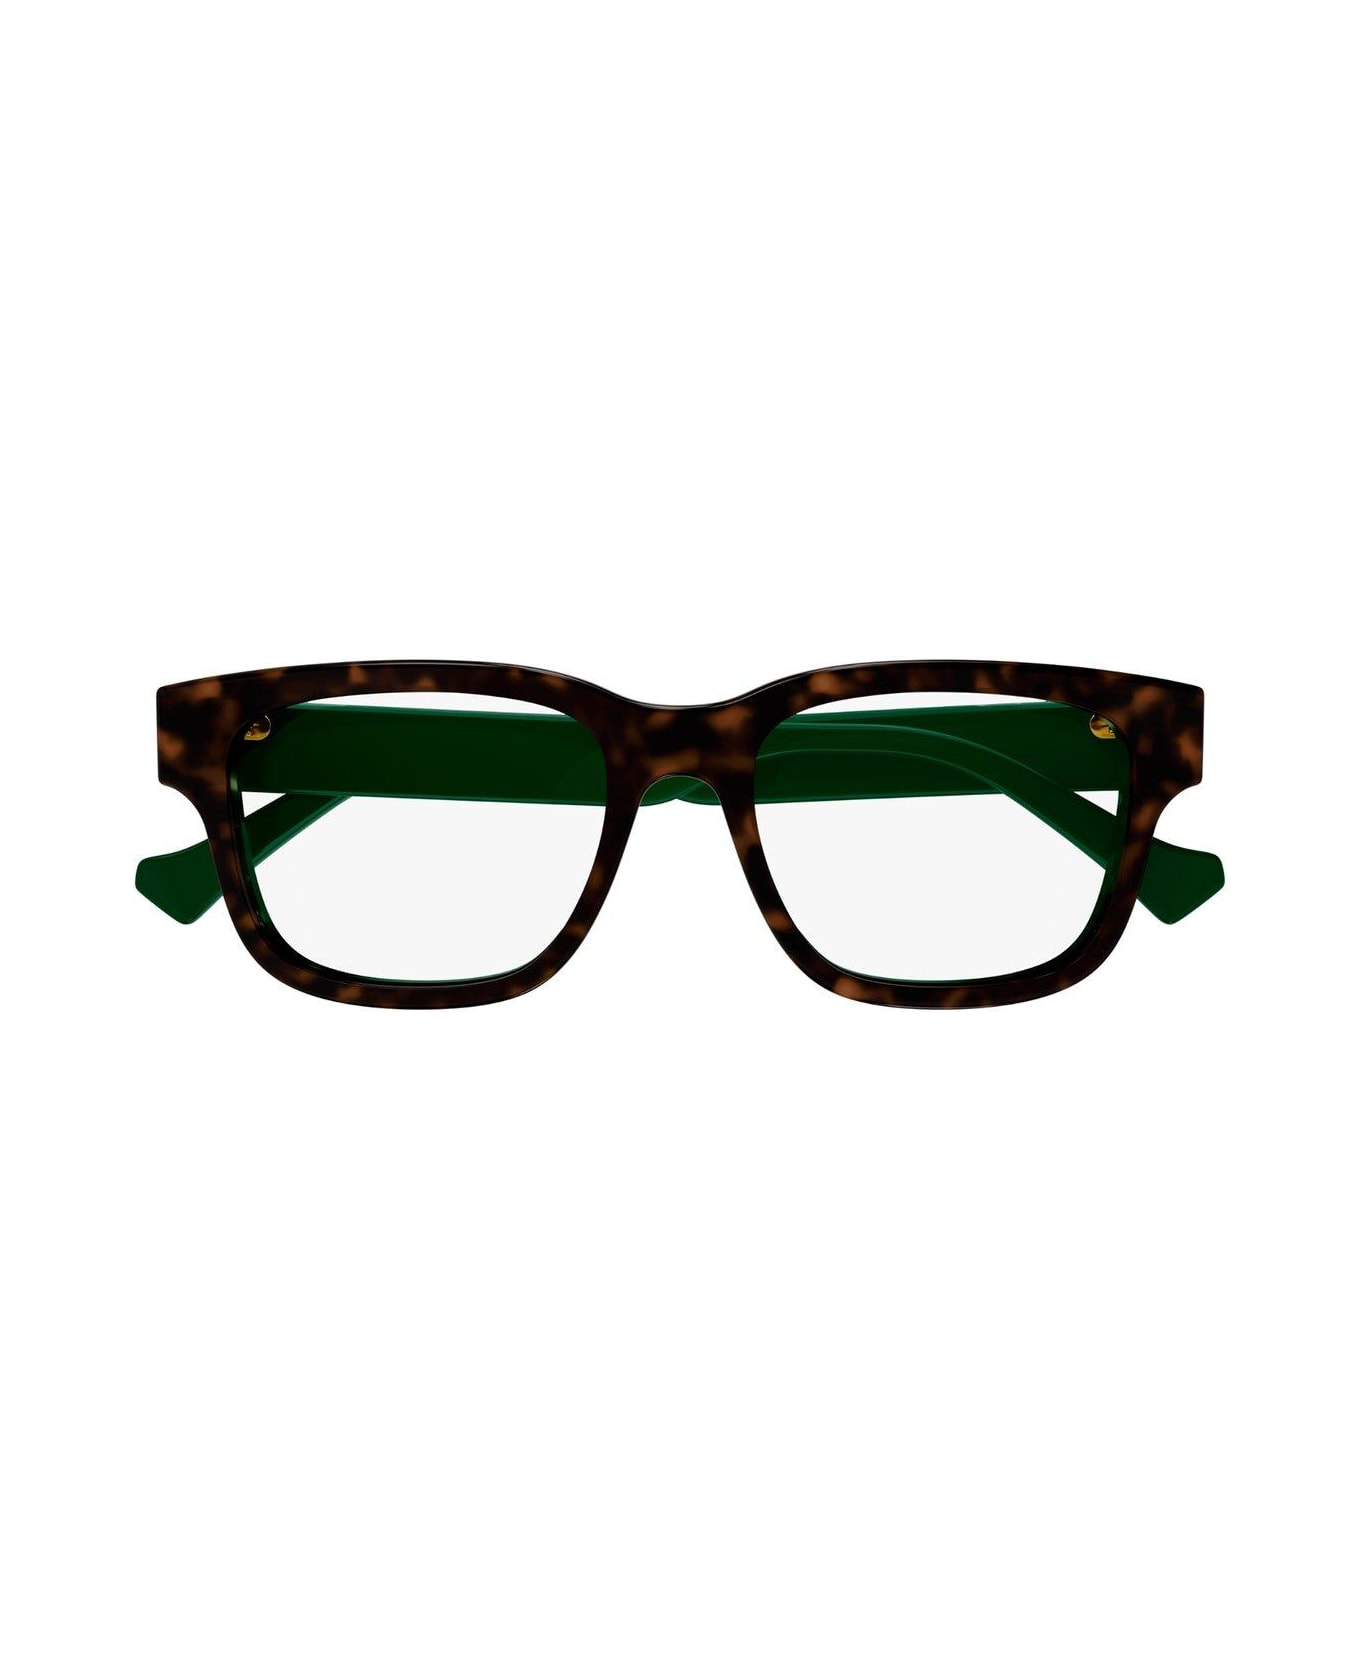 Gucci Eyewear Rectangular Frame Glasses - 002 havana havana transpa